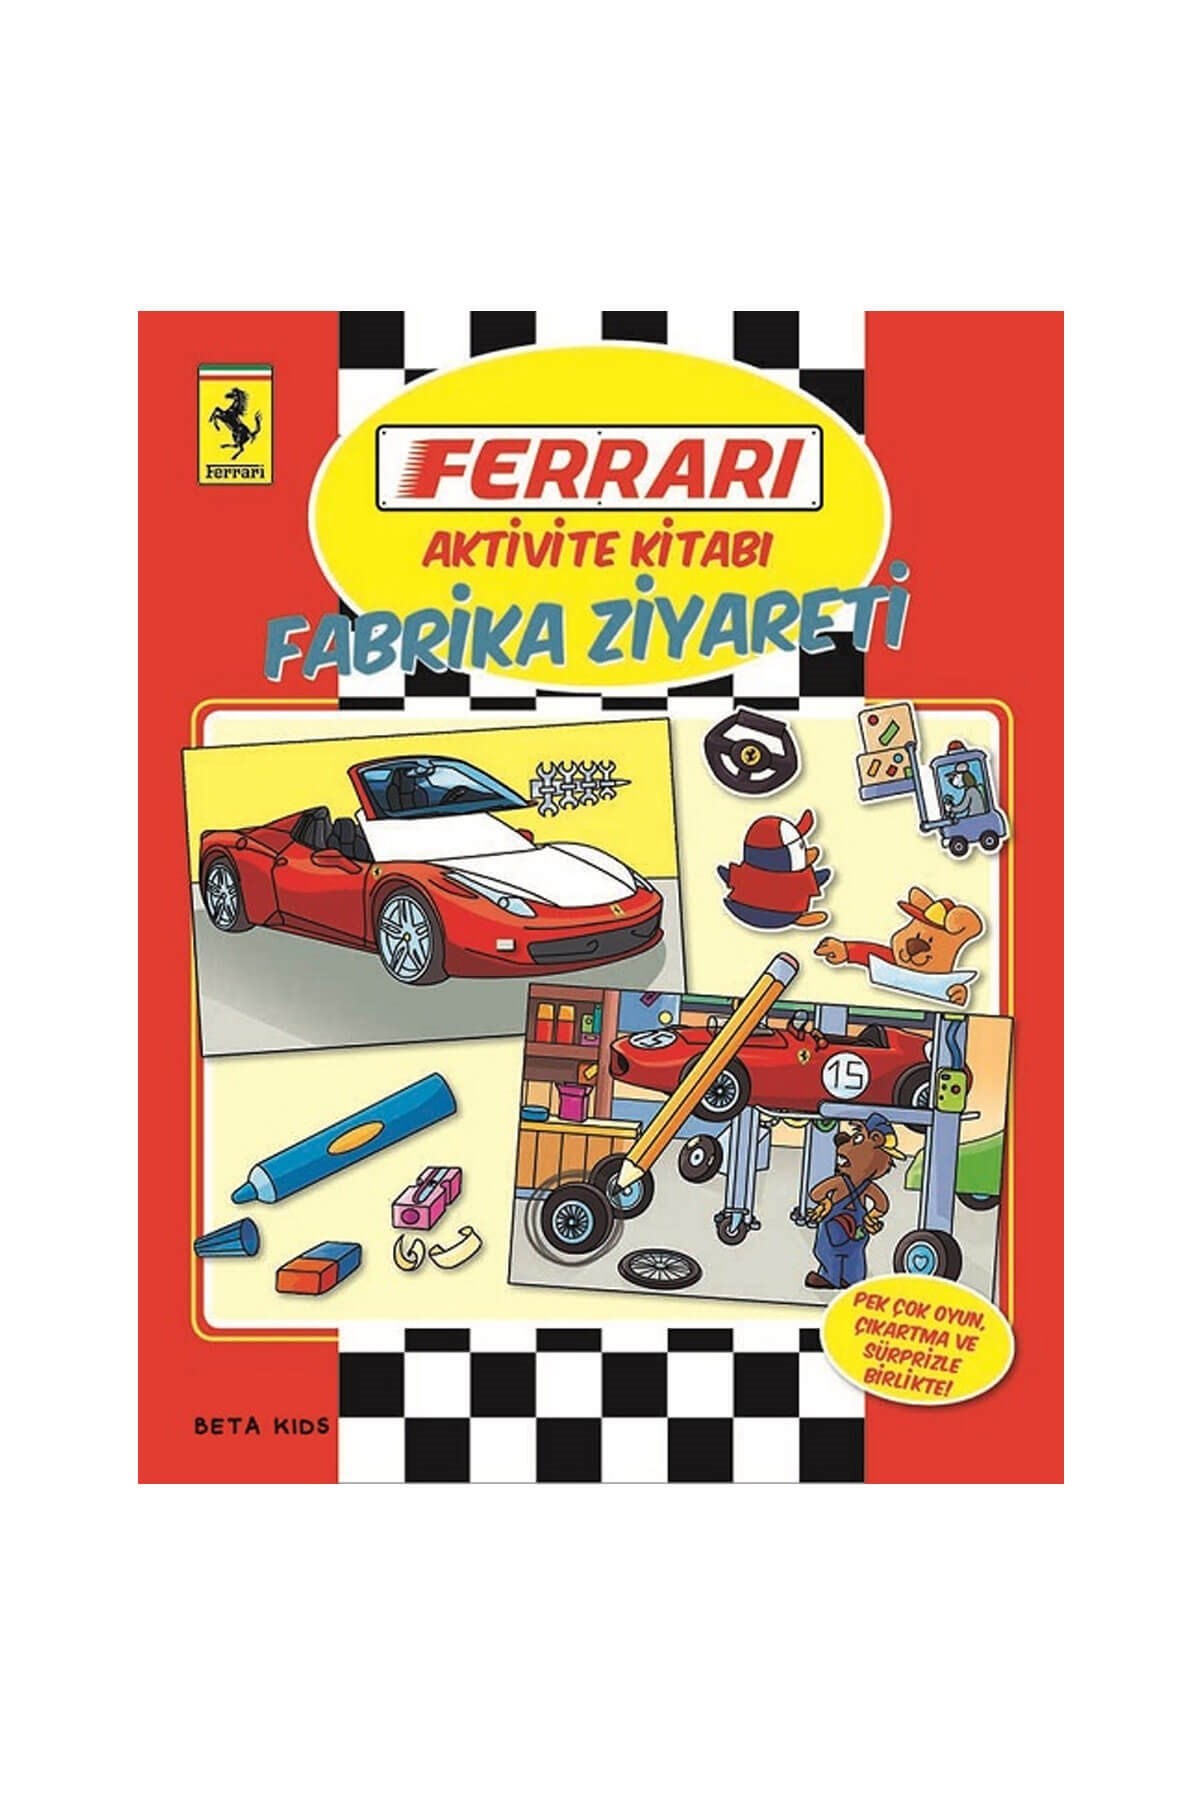 Ferrari Fabrika Ziyareti Aktivite Kitabı